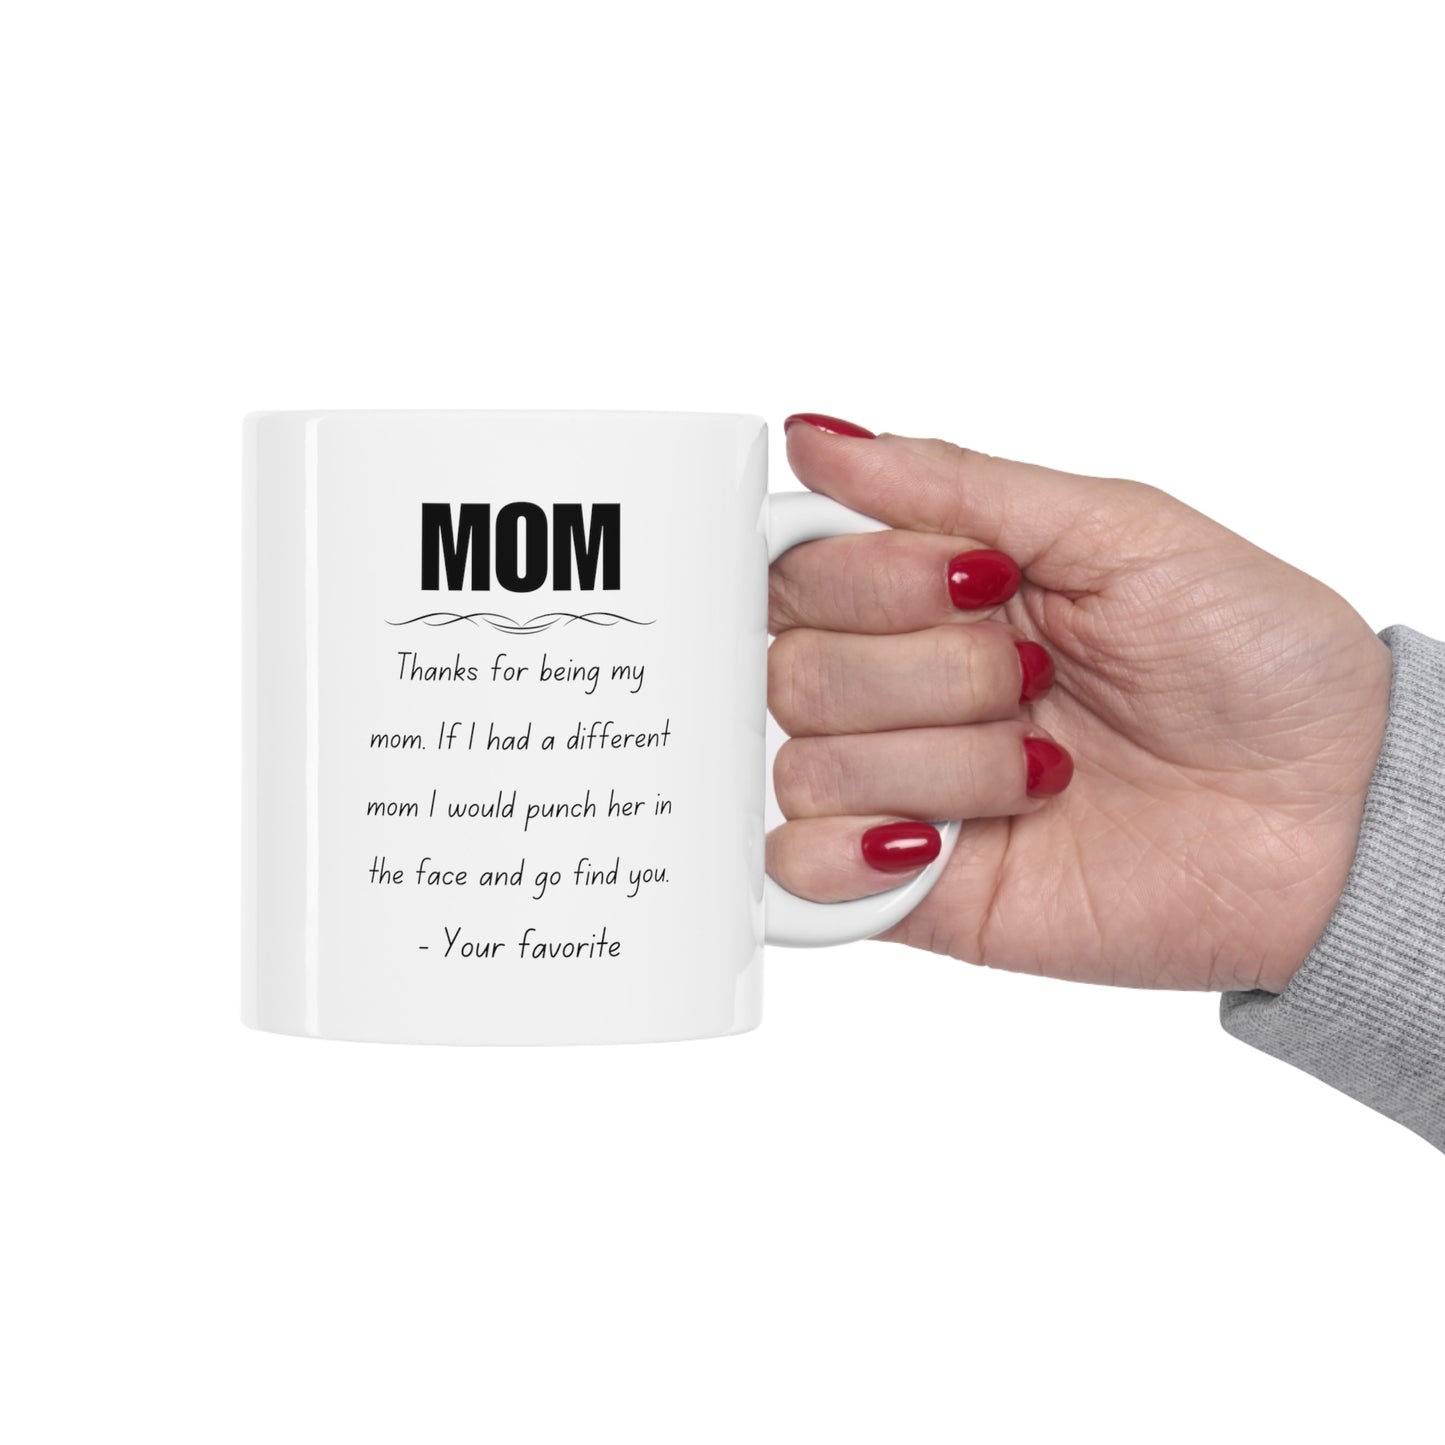 Mom funny coffee cup